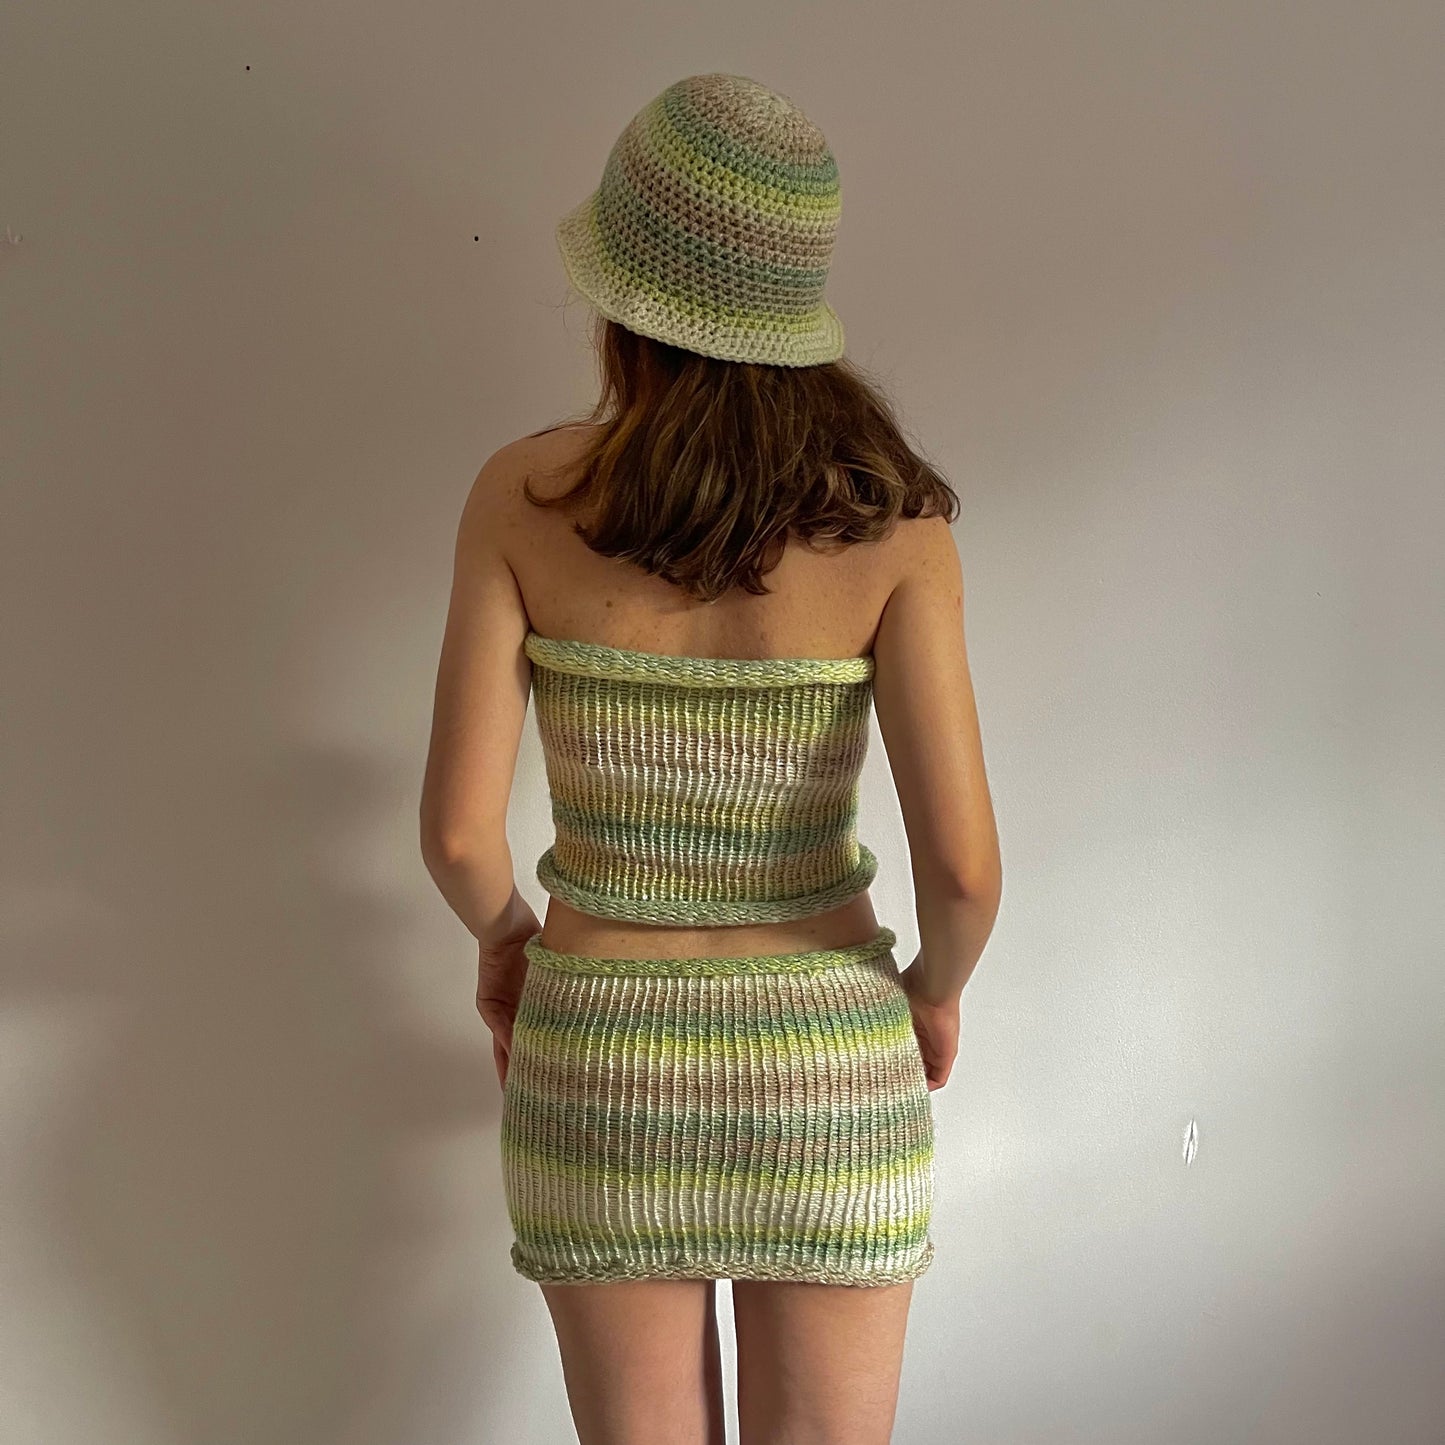 Handmade knitted mini skirt in green, beige and cream